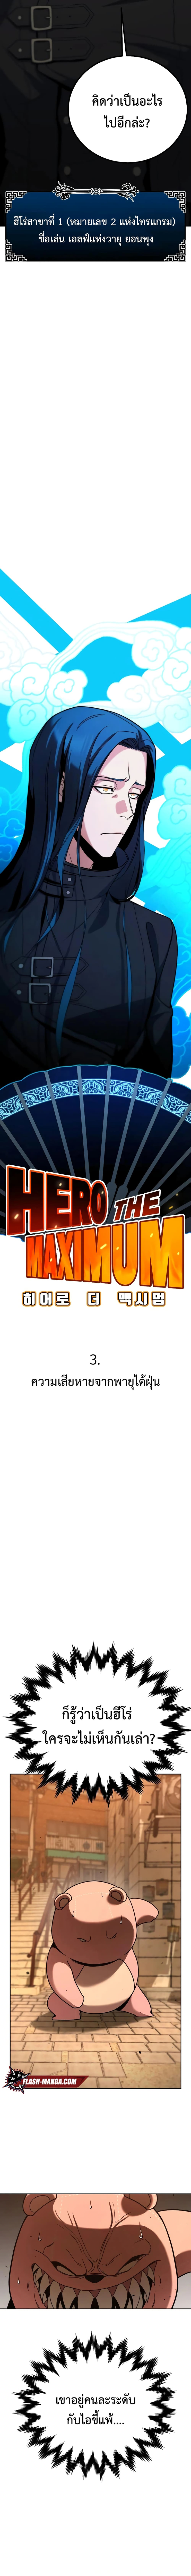 Hero the Maximum 3-3